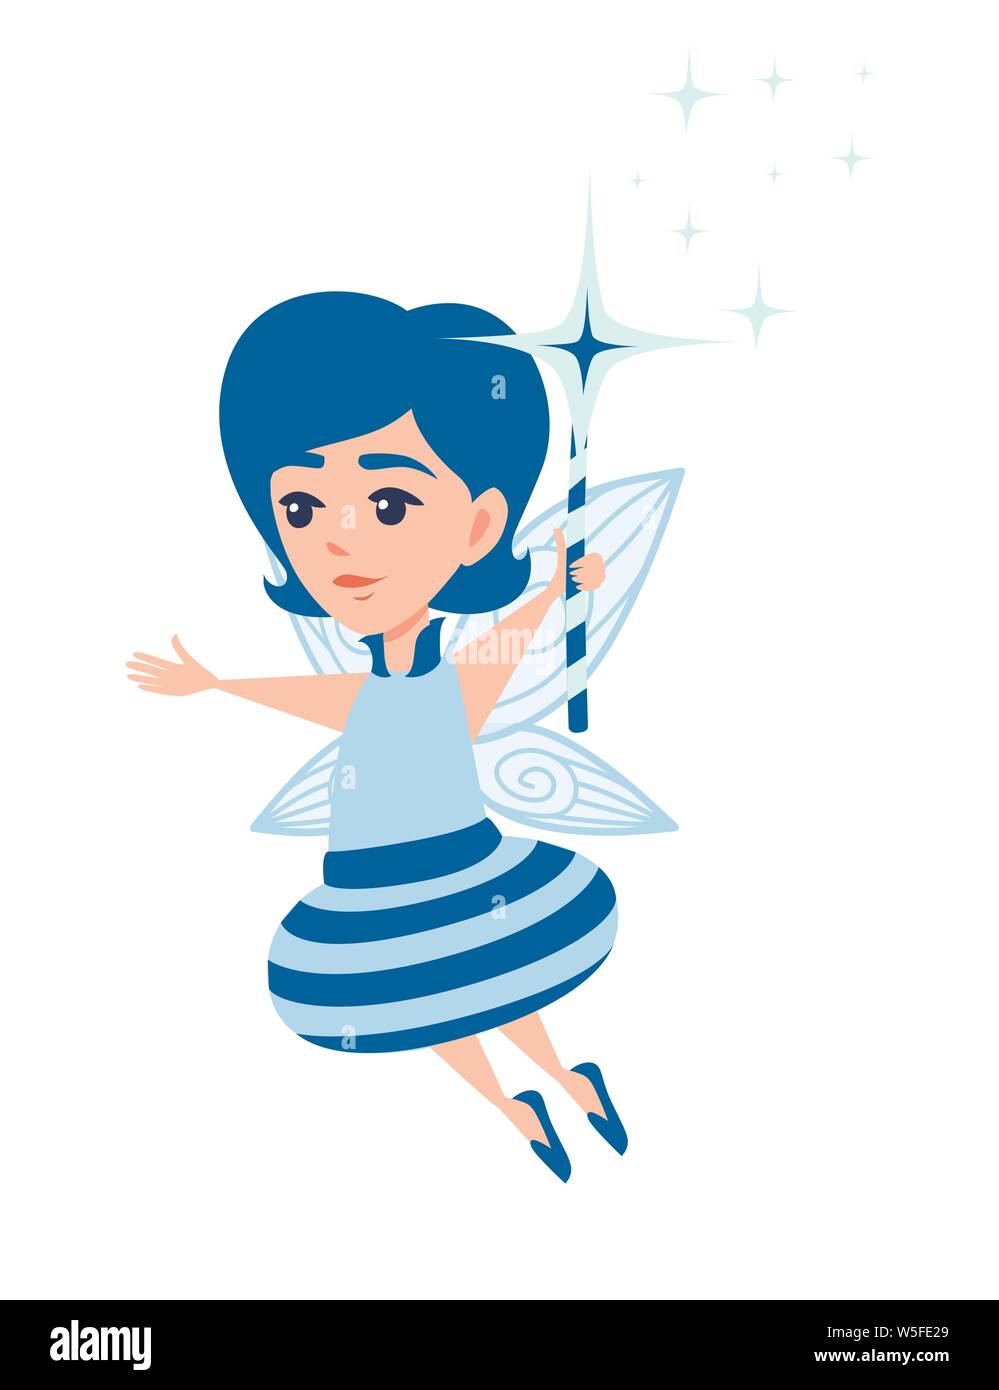 Flying butterfly Fairy mit Dreieck stern Zauberstab und trägt blaue Kleidung Cartoon Character Design flachbild Vector Illustration. Stock Vektor